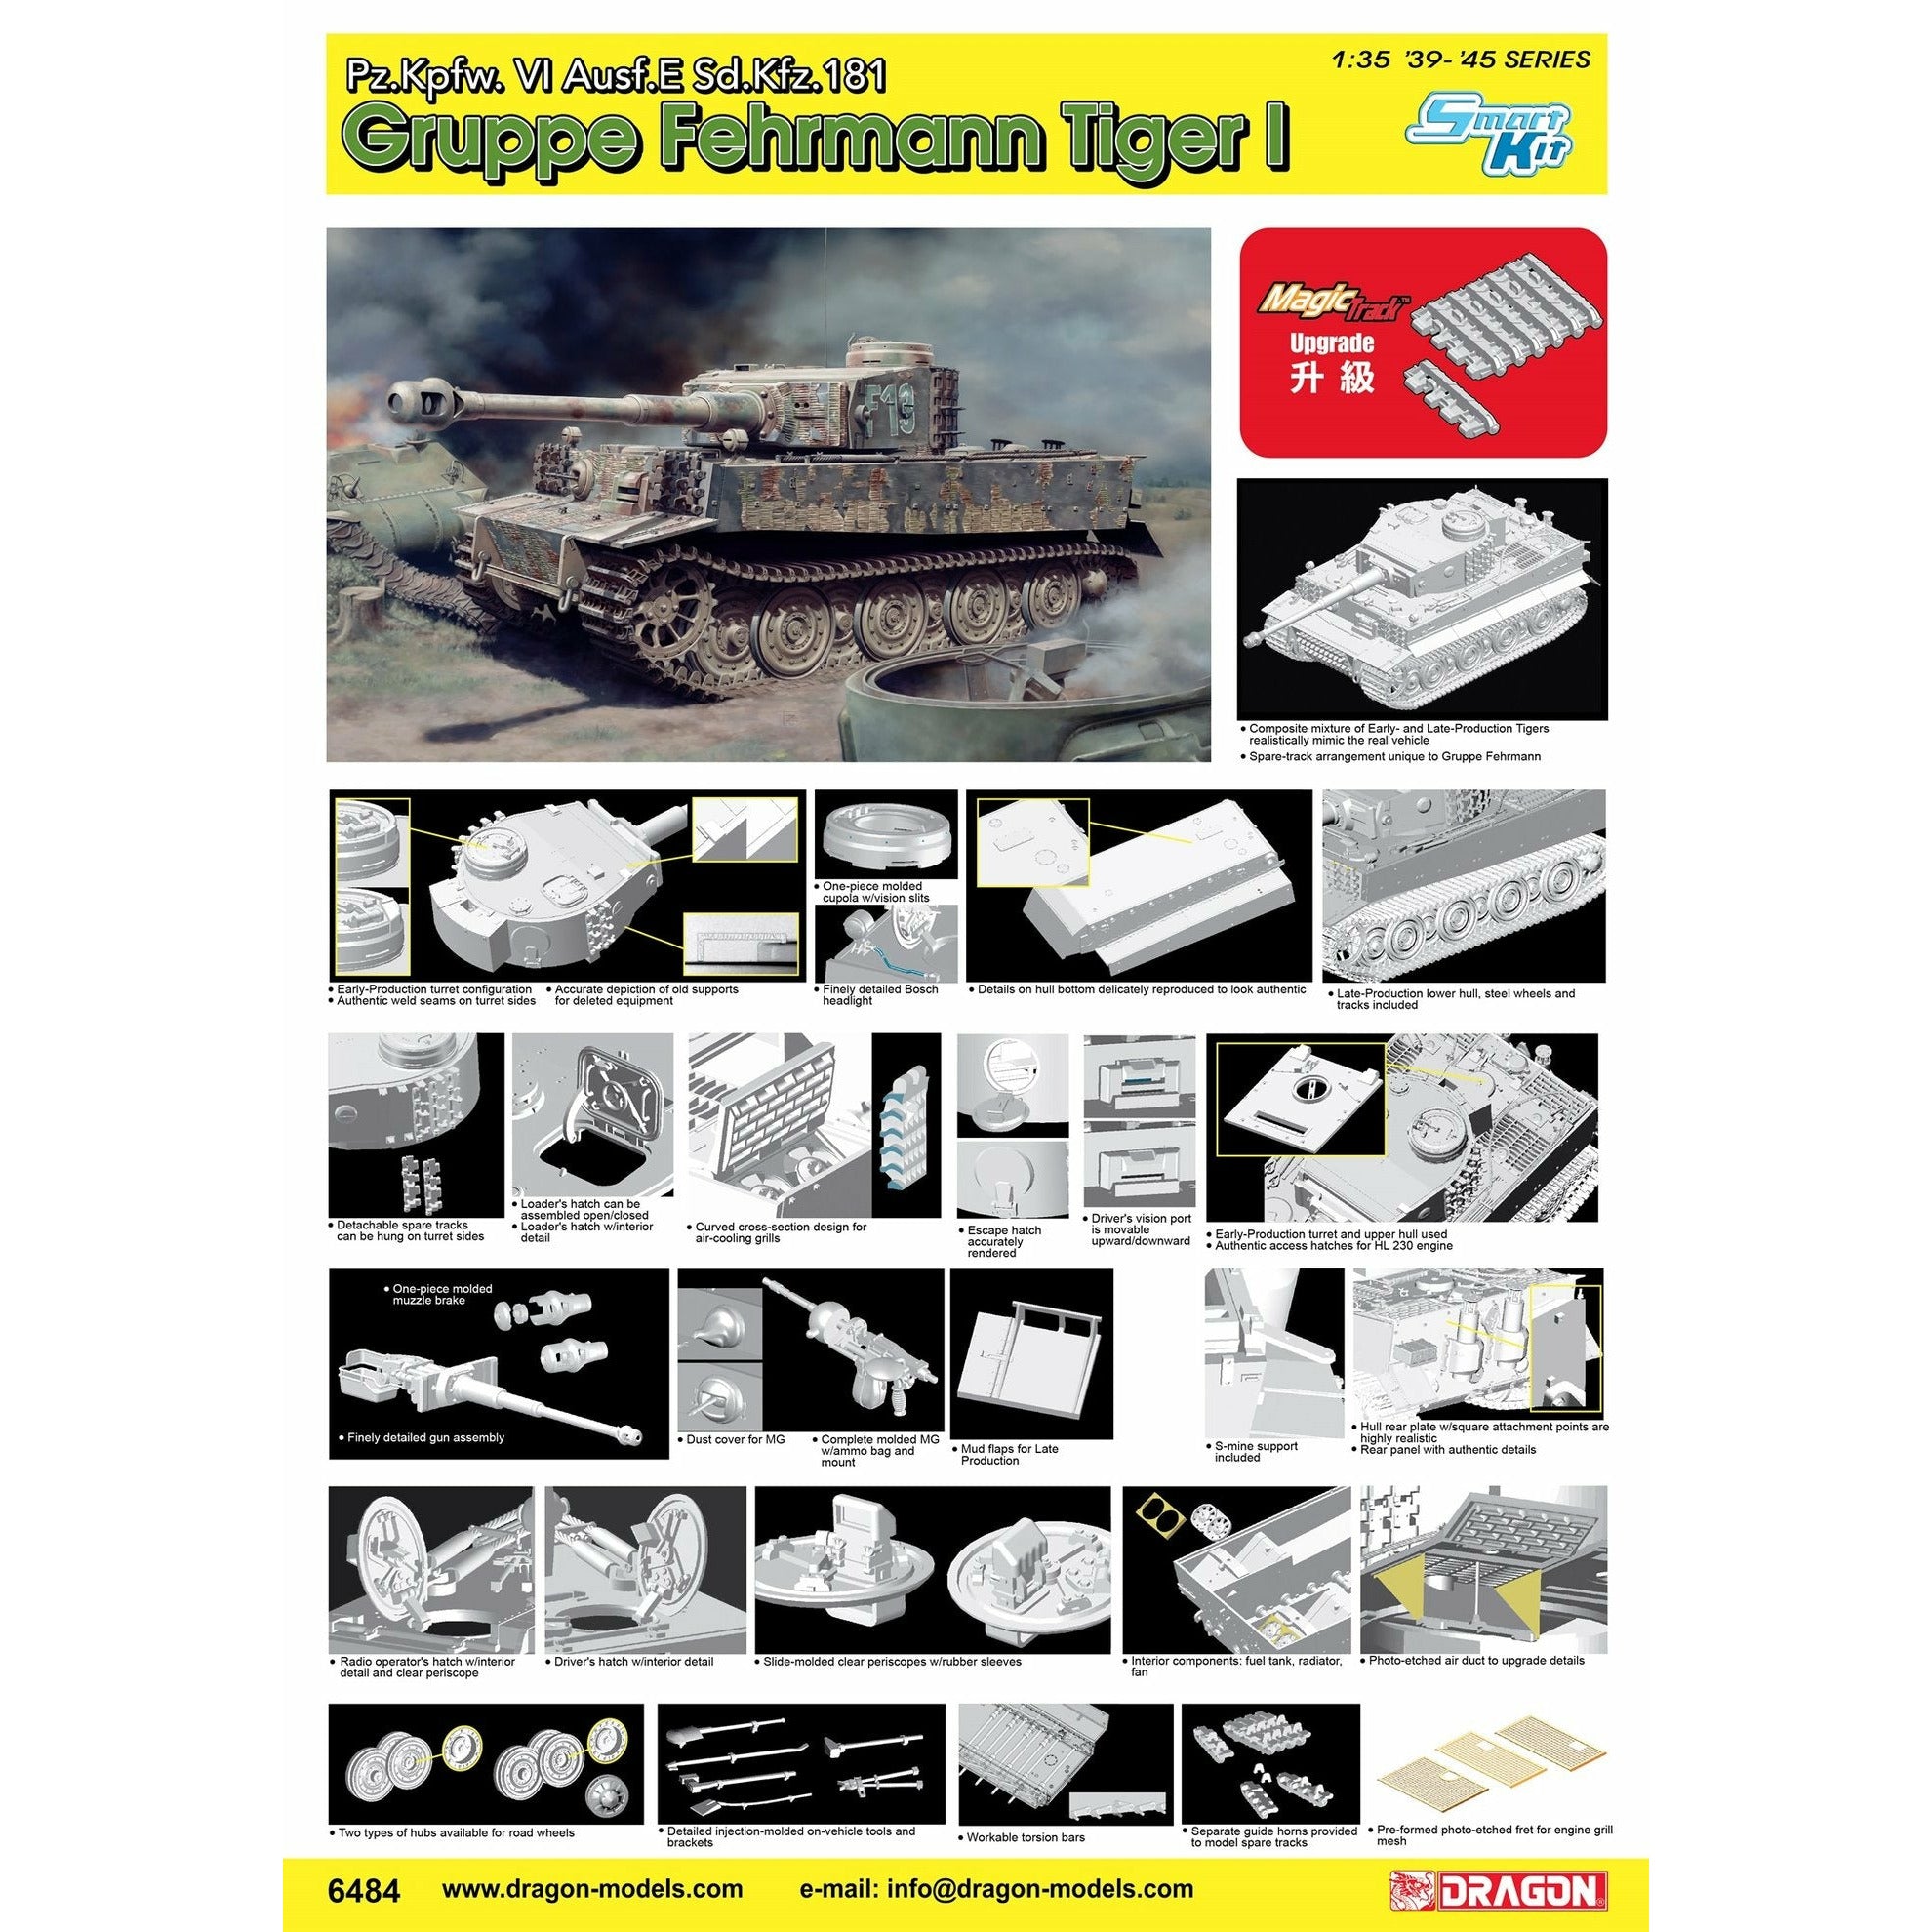 ‘39-45’ Series Pz.Kpfw.Vi Ausf.E Tiger I Initial Production s.Pz.Abt.502 Leningrad Region 1942/3 (Smart Kit) 1/35 #6600 by Dragon Models